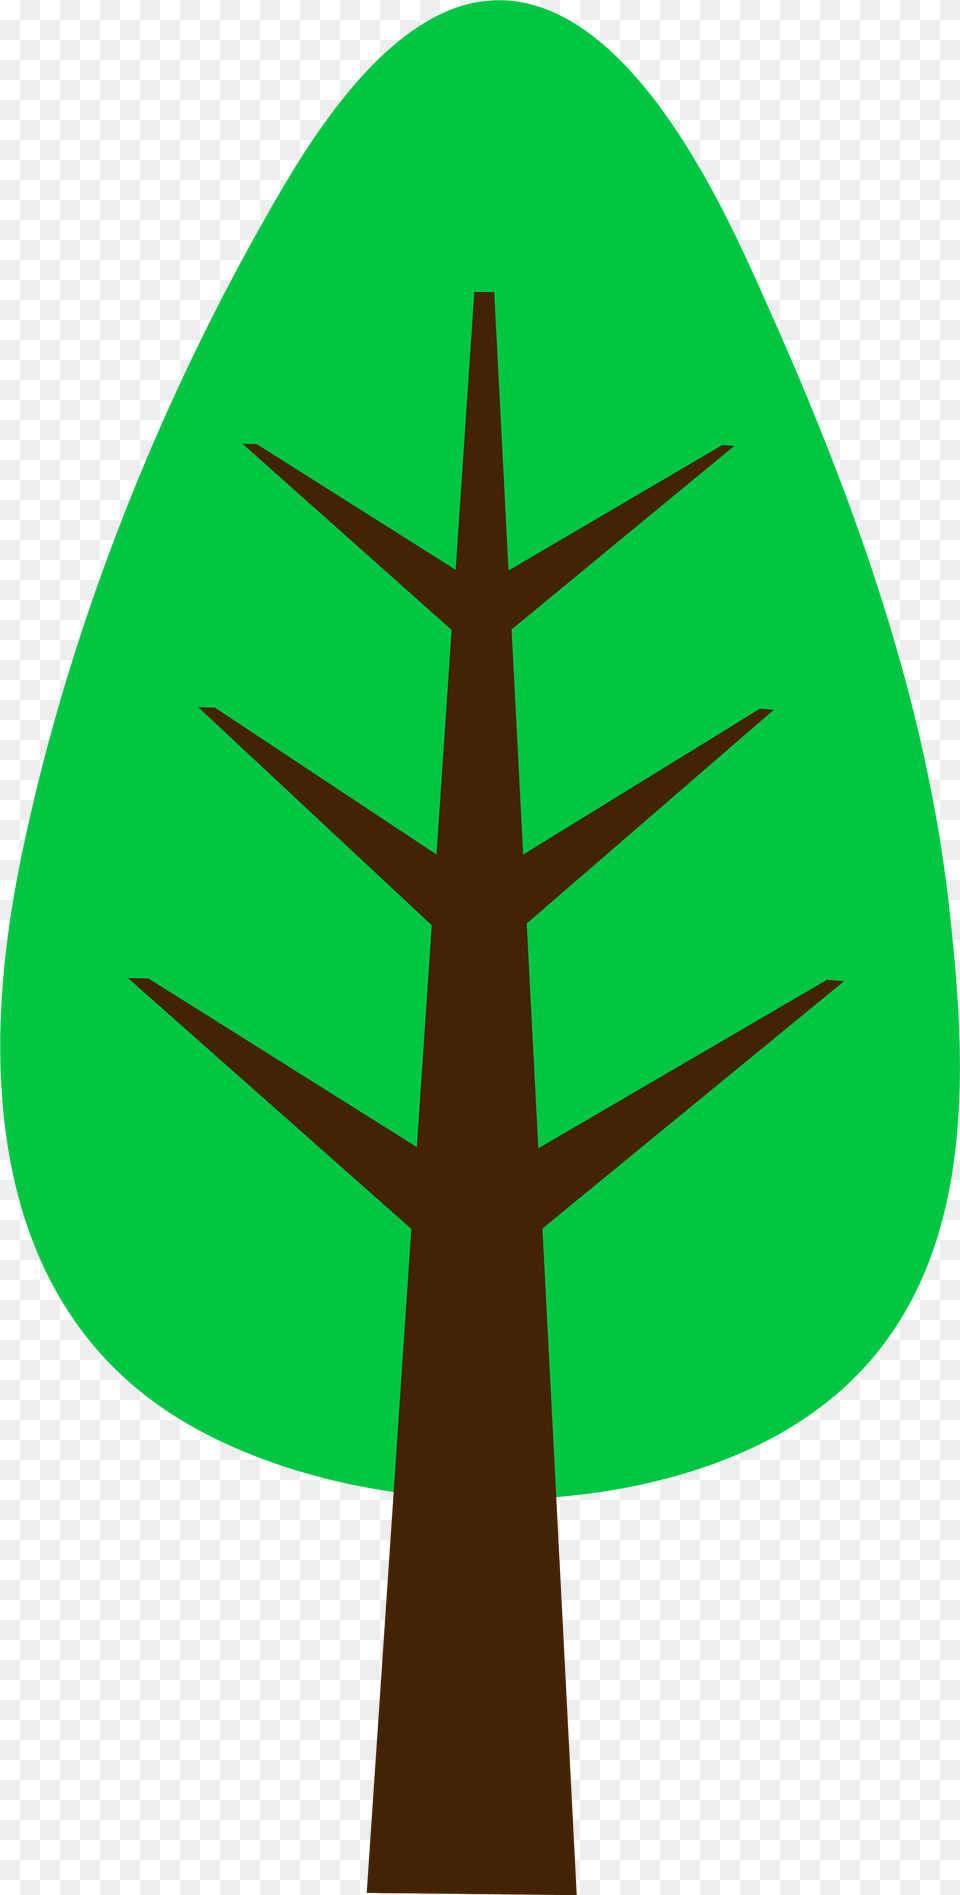 Cute Simple Green Tree Clip Art Cartoon Drawings Of Trees, Cross, Symbol, Guitar, Musical Instrument Free Transparent Png